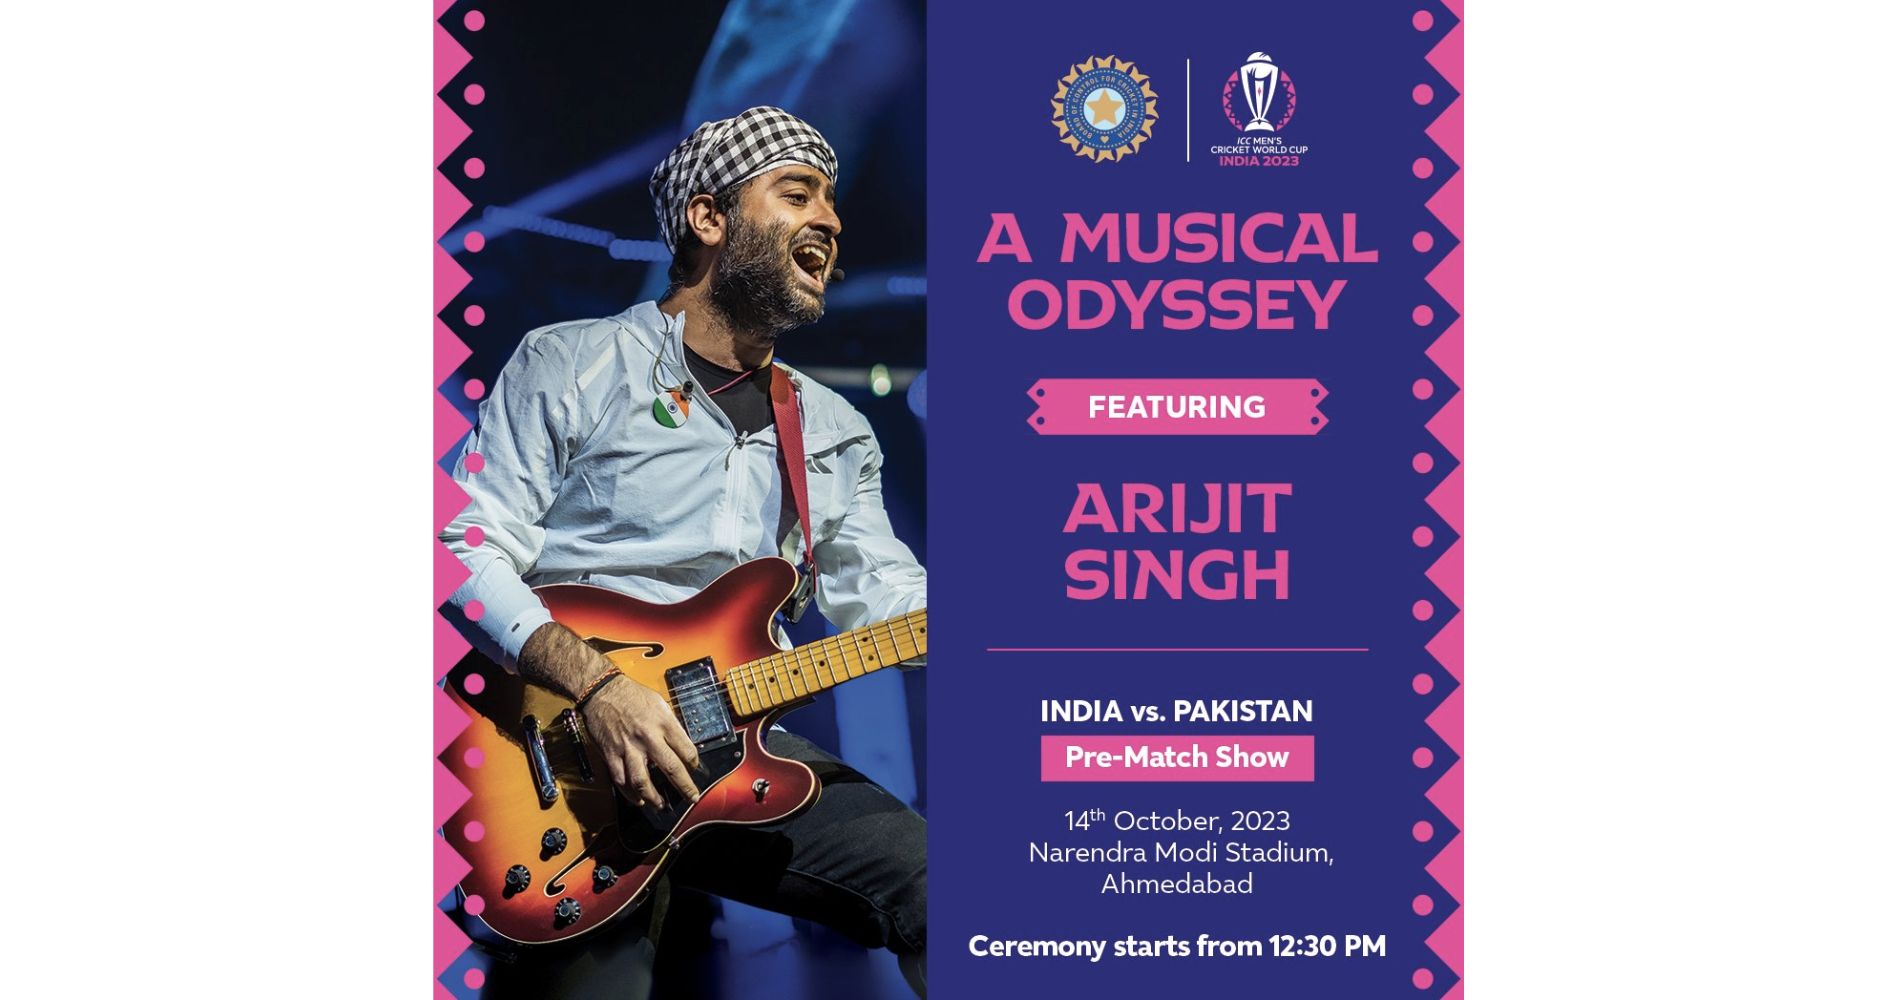 Arijit Singh To perform Live At Ahmedabad's Modi Stadium Ahead